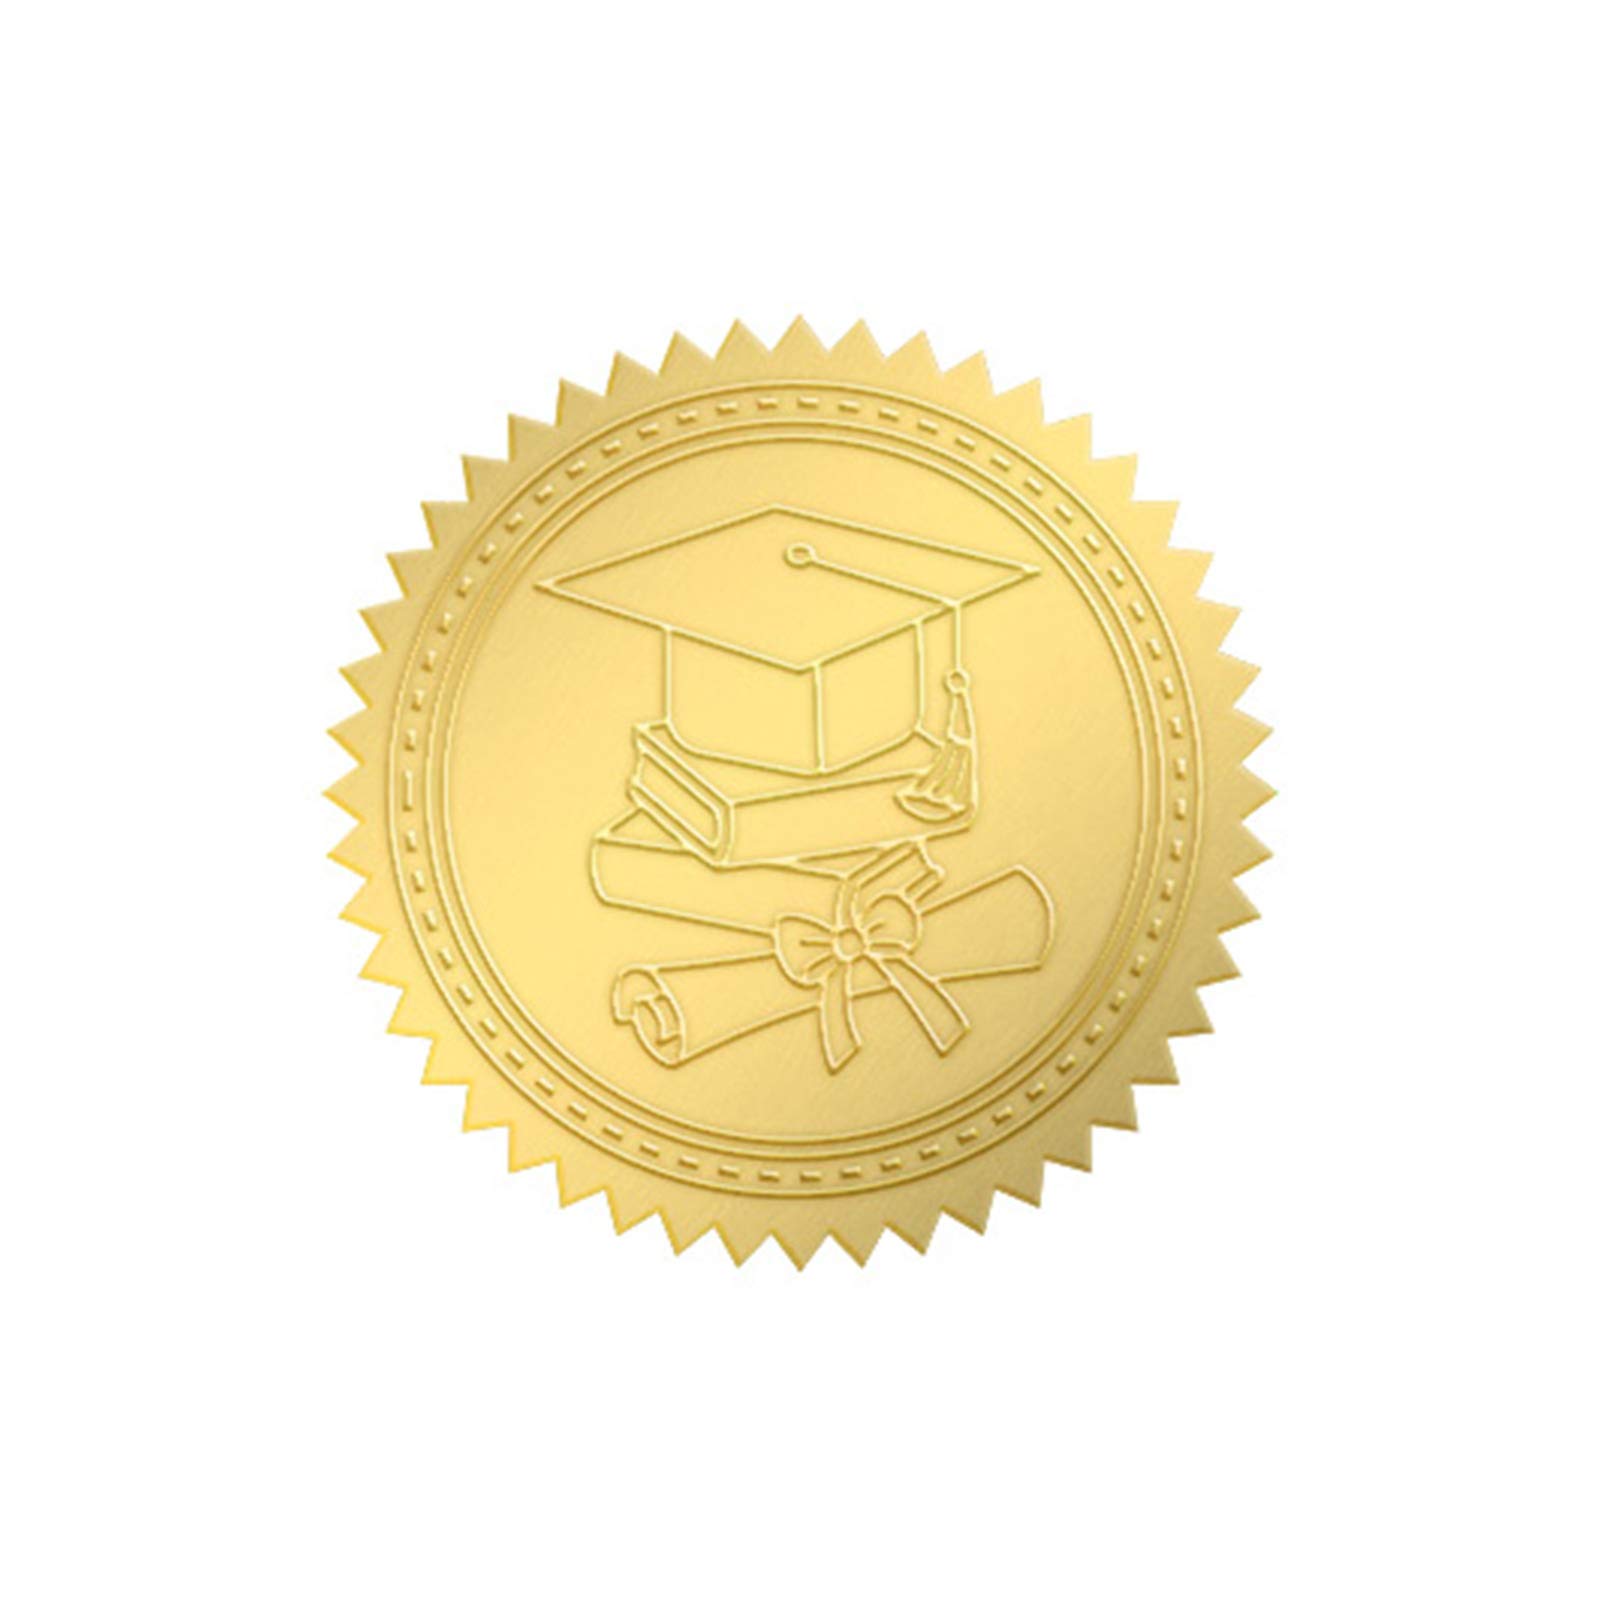 Certificates with graduation cap